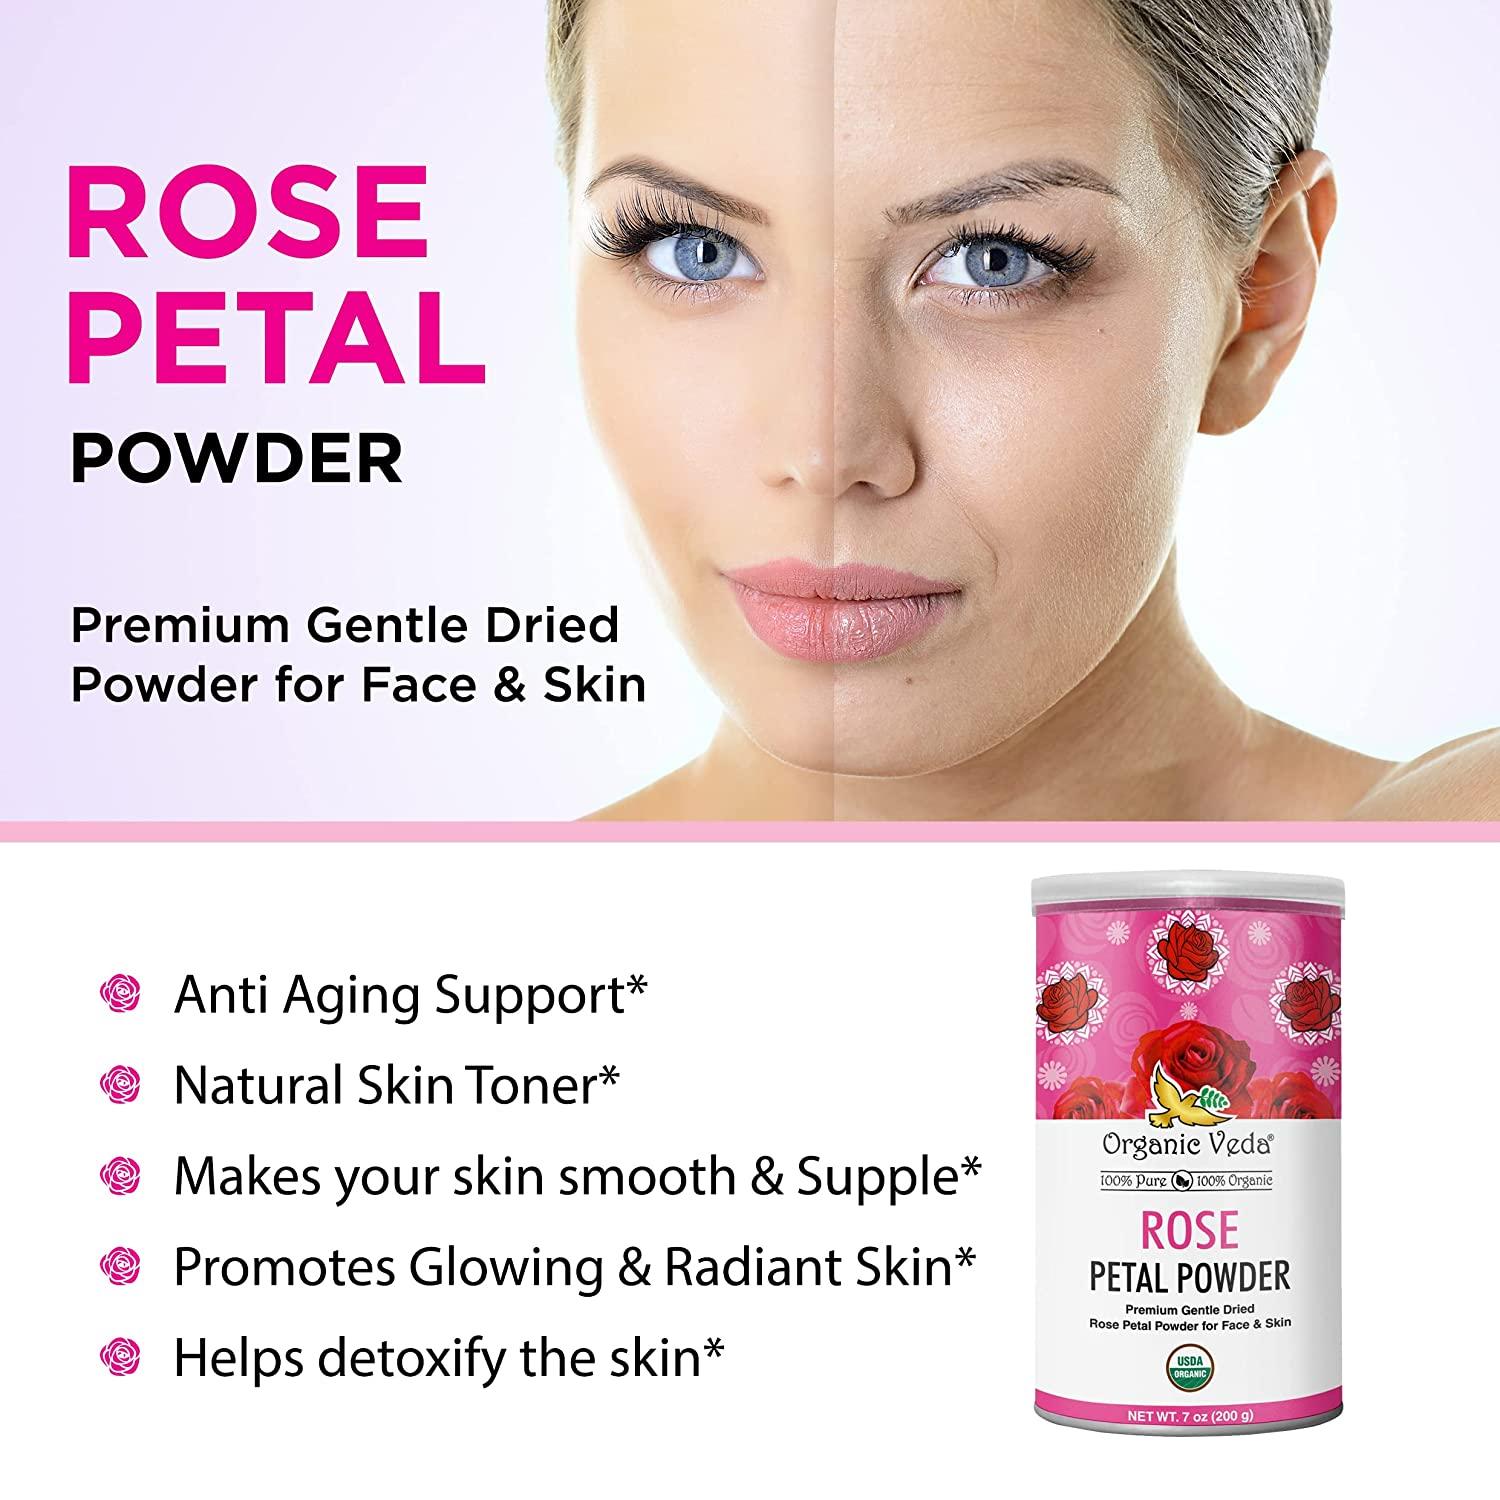 Organic Veda Edible Rose Petal Powder - Edible Rose Dusting Powder for  Cooking & Baking - Natural Powdered Organic Rose Petals for DIY Face Masks,  Skin & Hair Care Products - Vegan